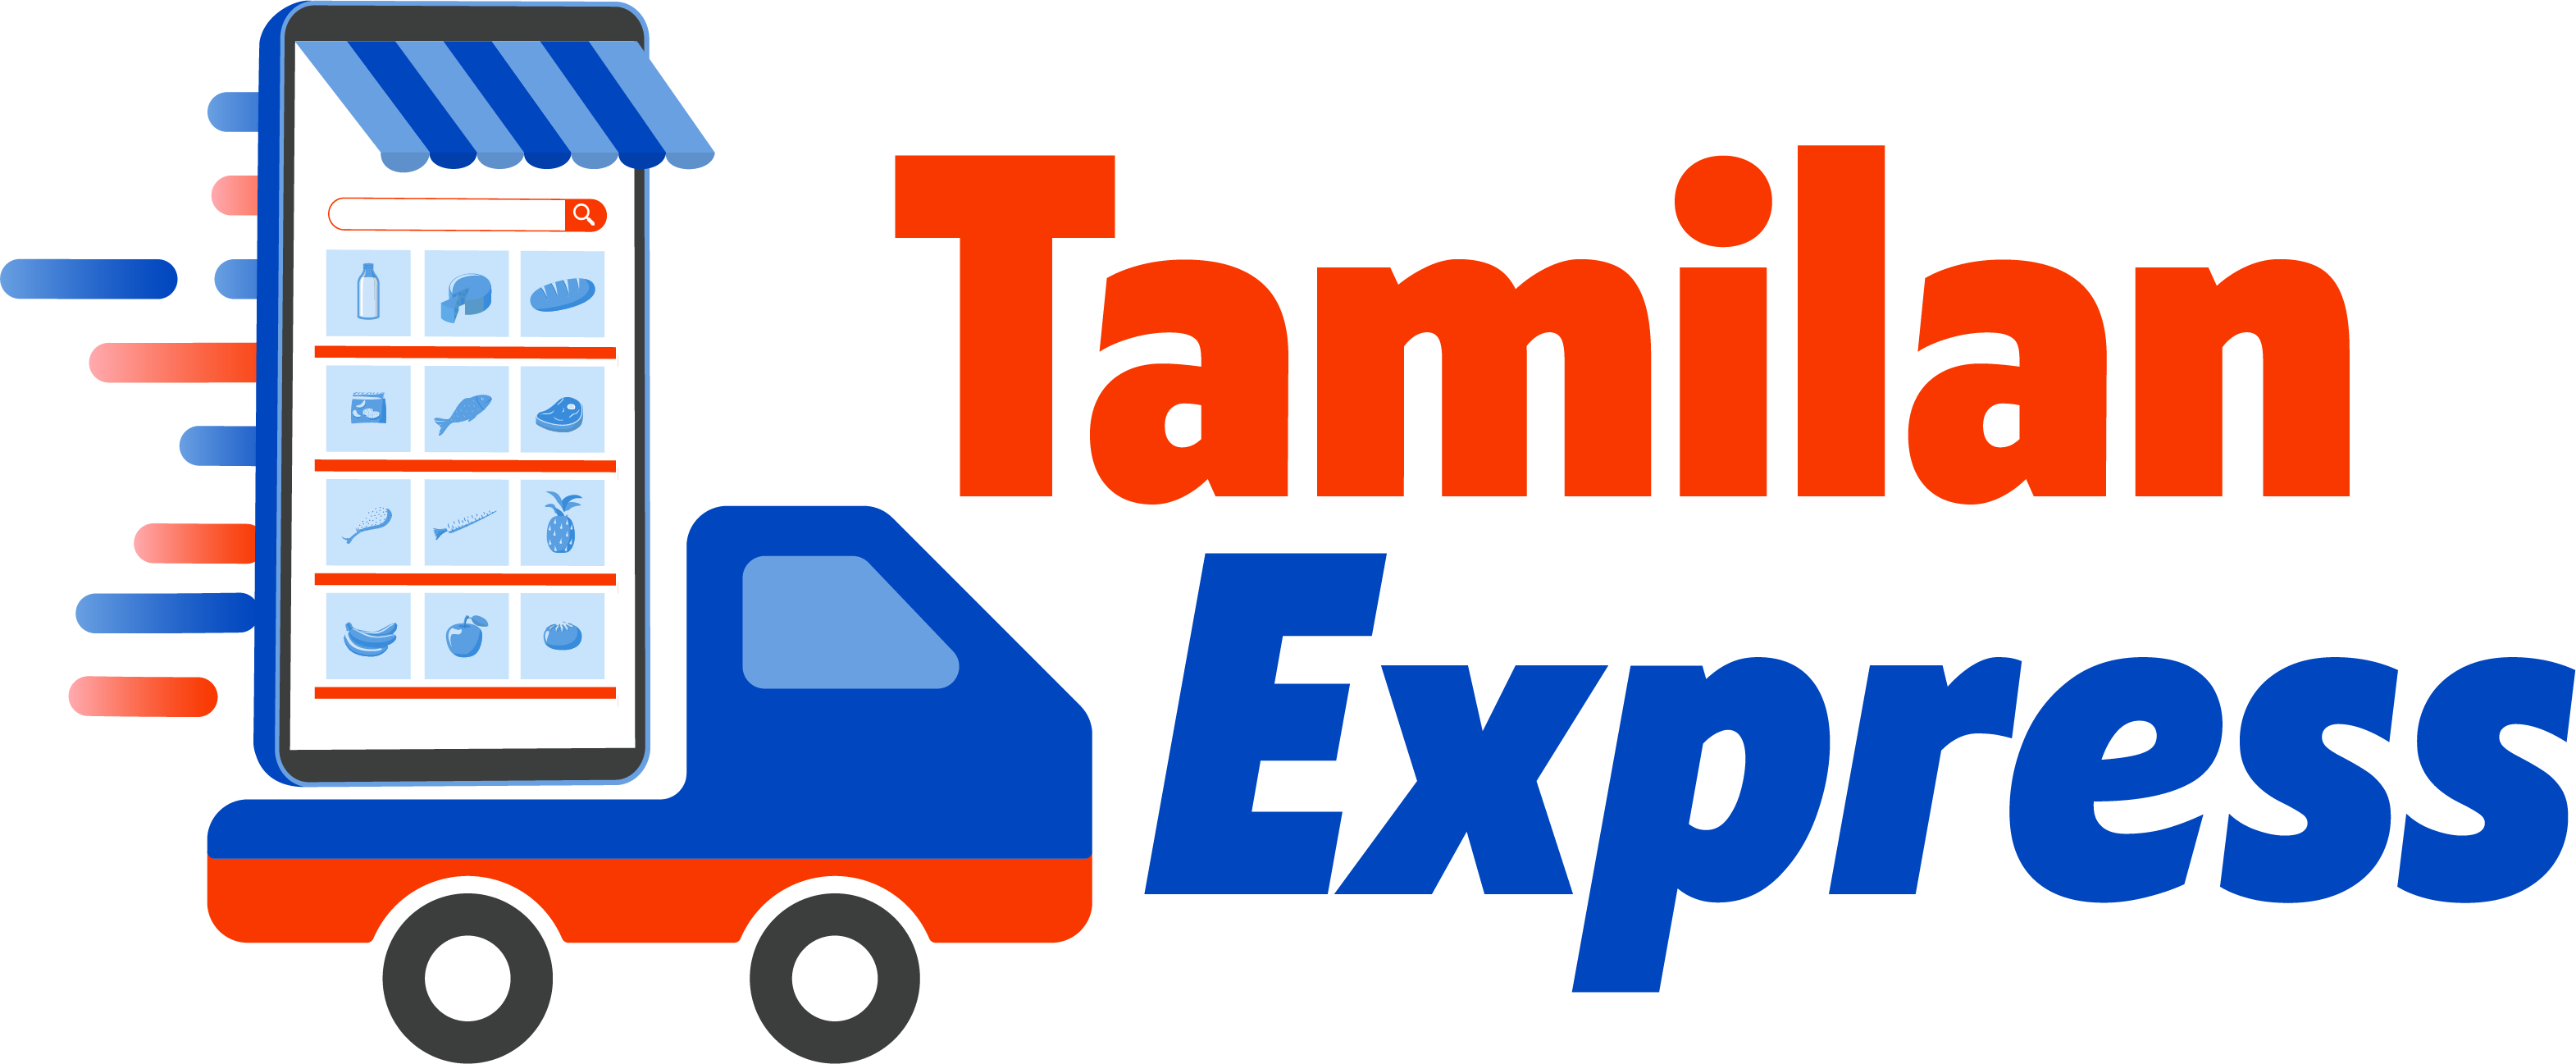 Tamilan express logo, a smart phone along with a shop